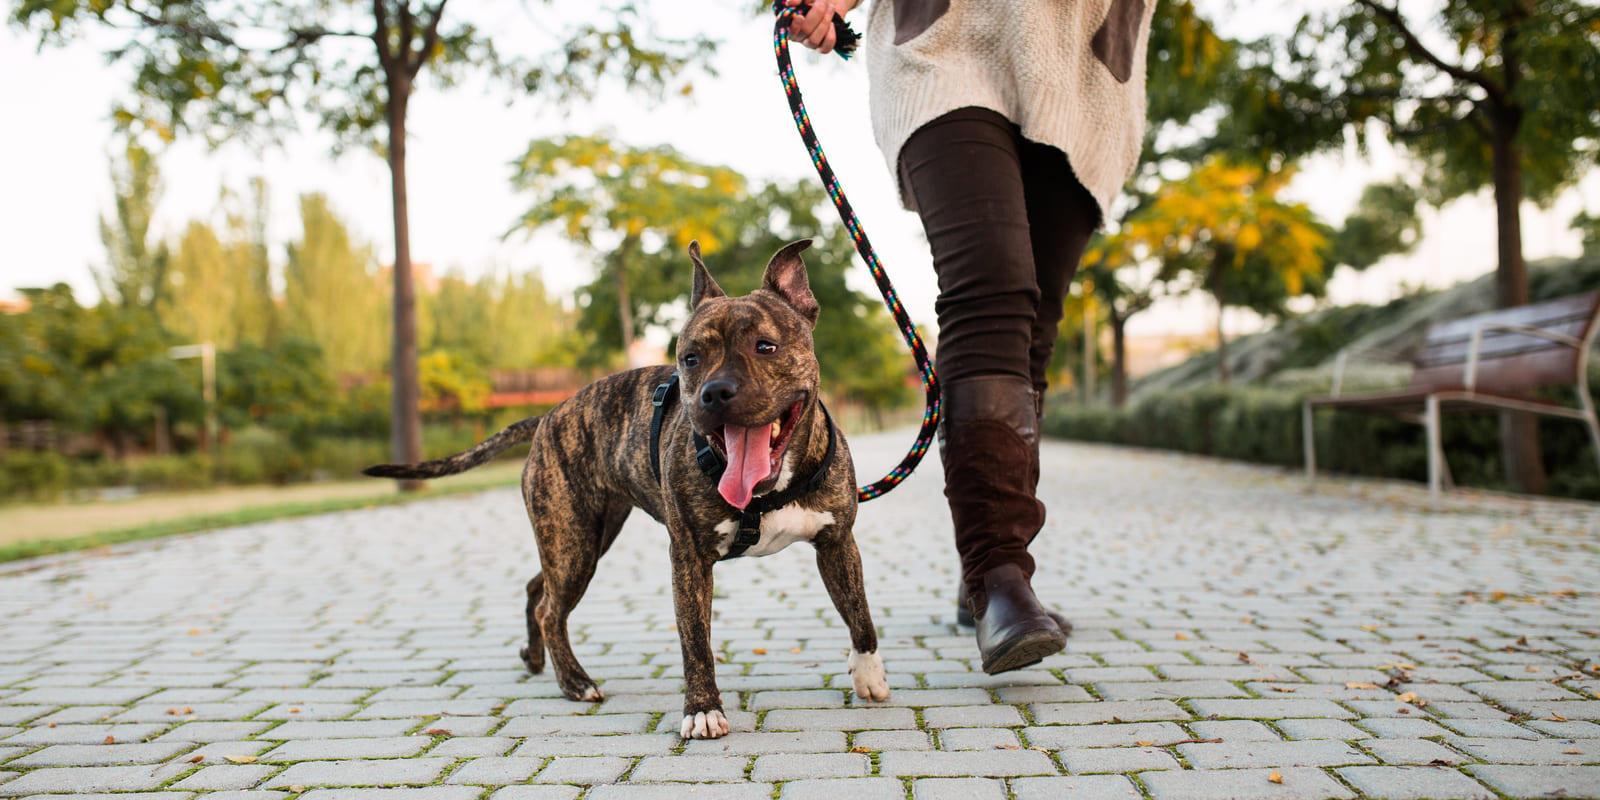 7 Dog Walking Tips Everyone Should Know